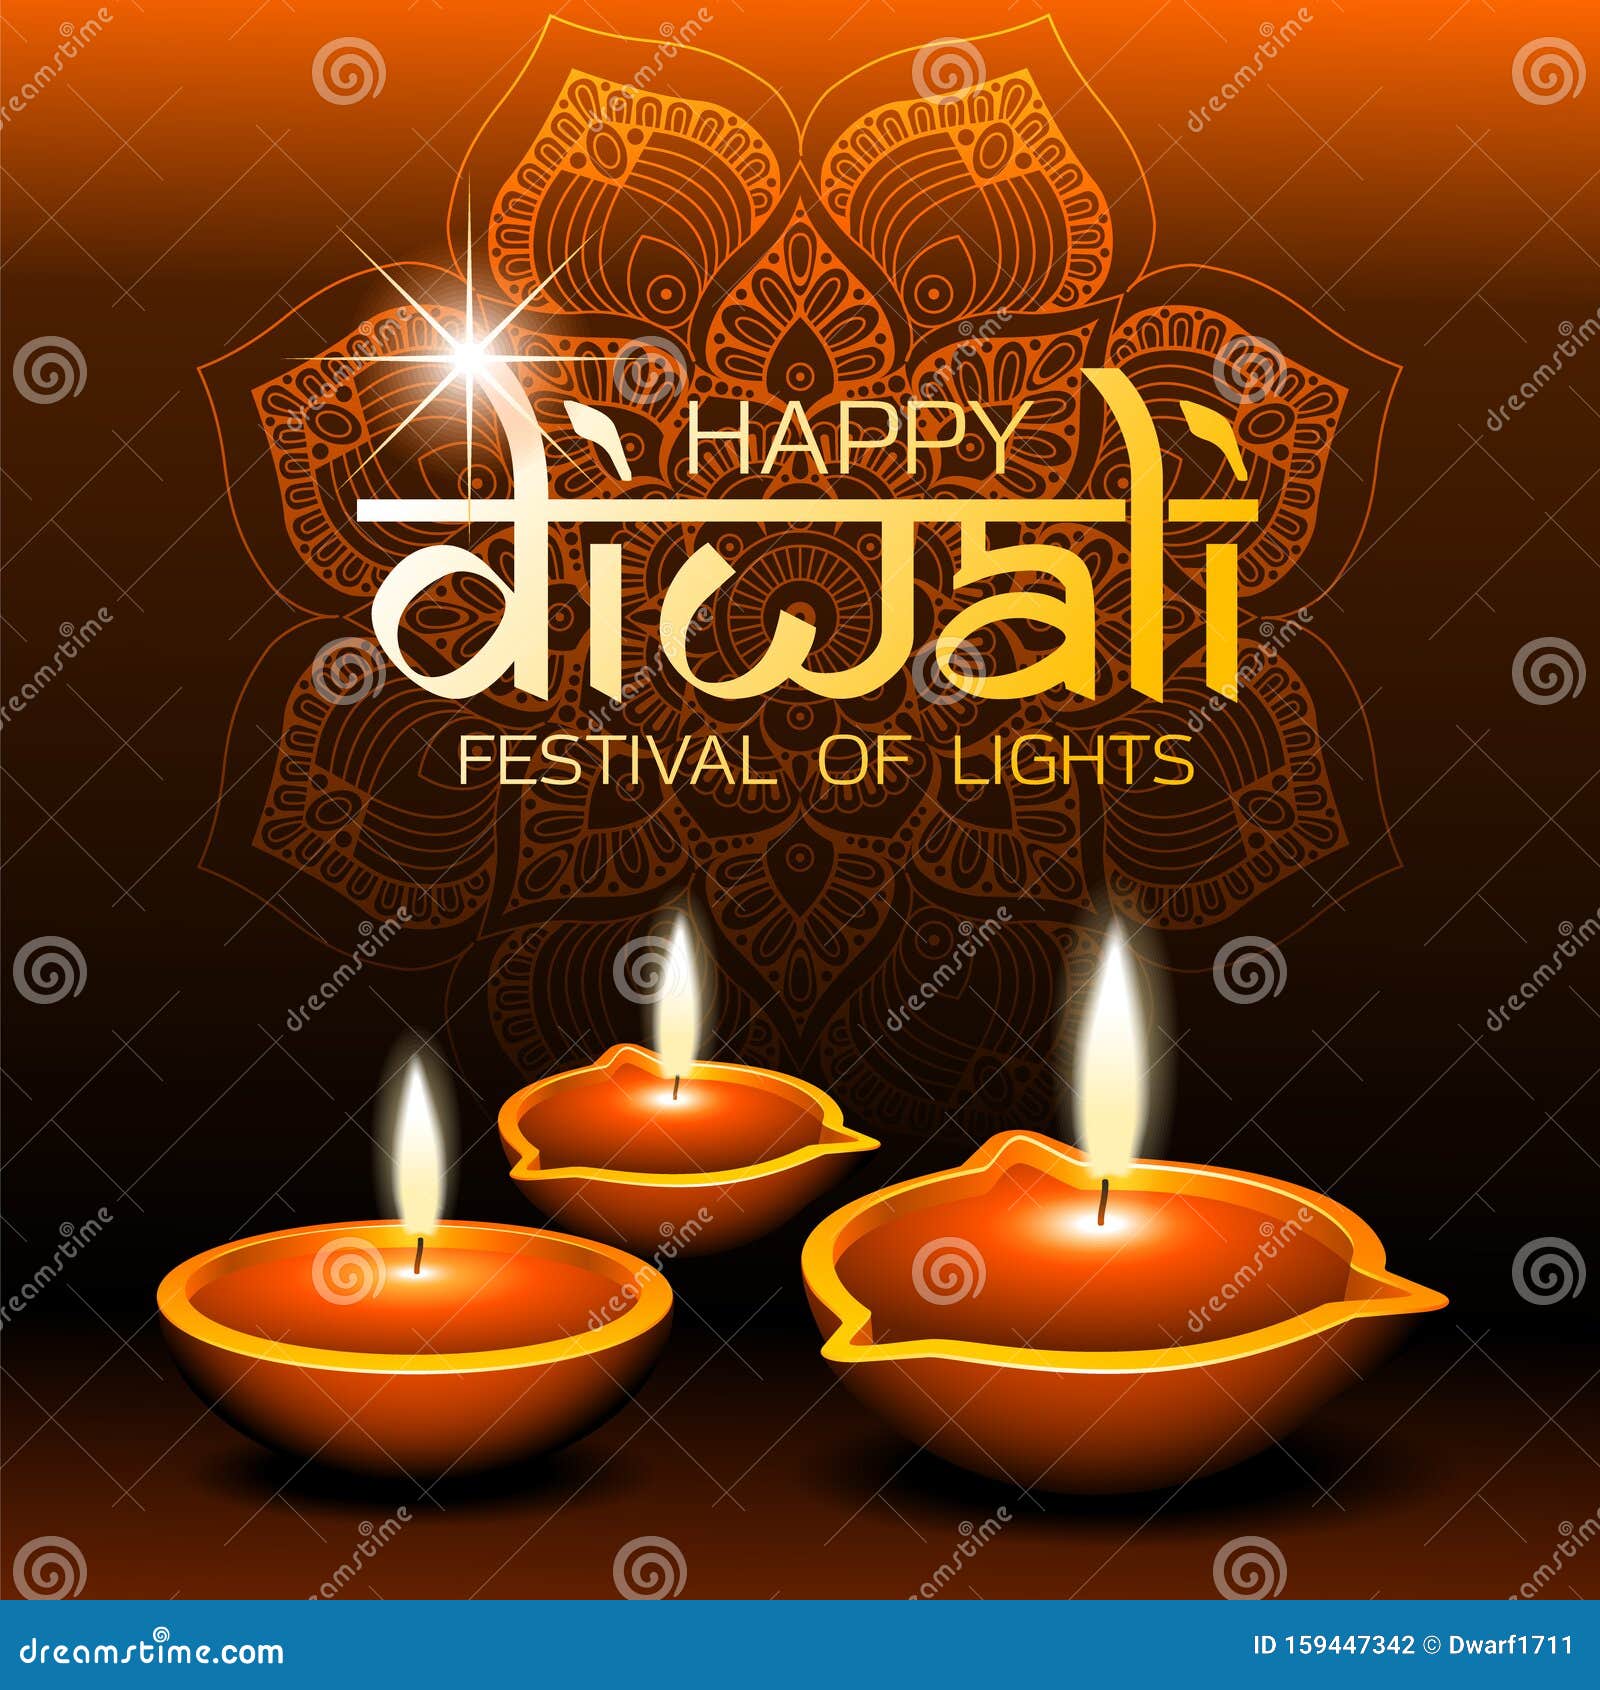 Happy Diwali Festival of Lights Instagram Template Creative Vector ...